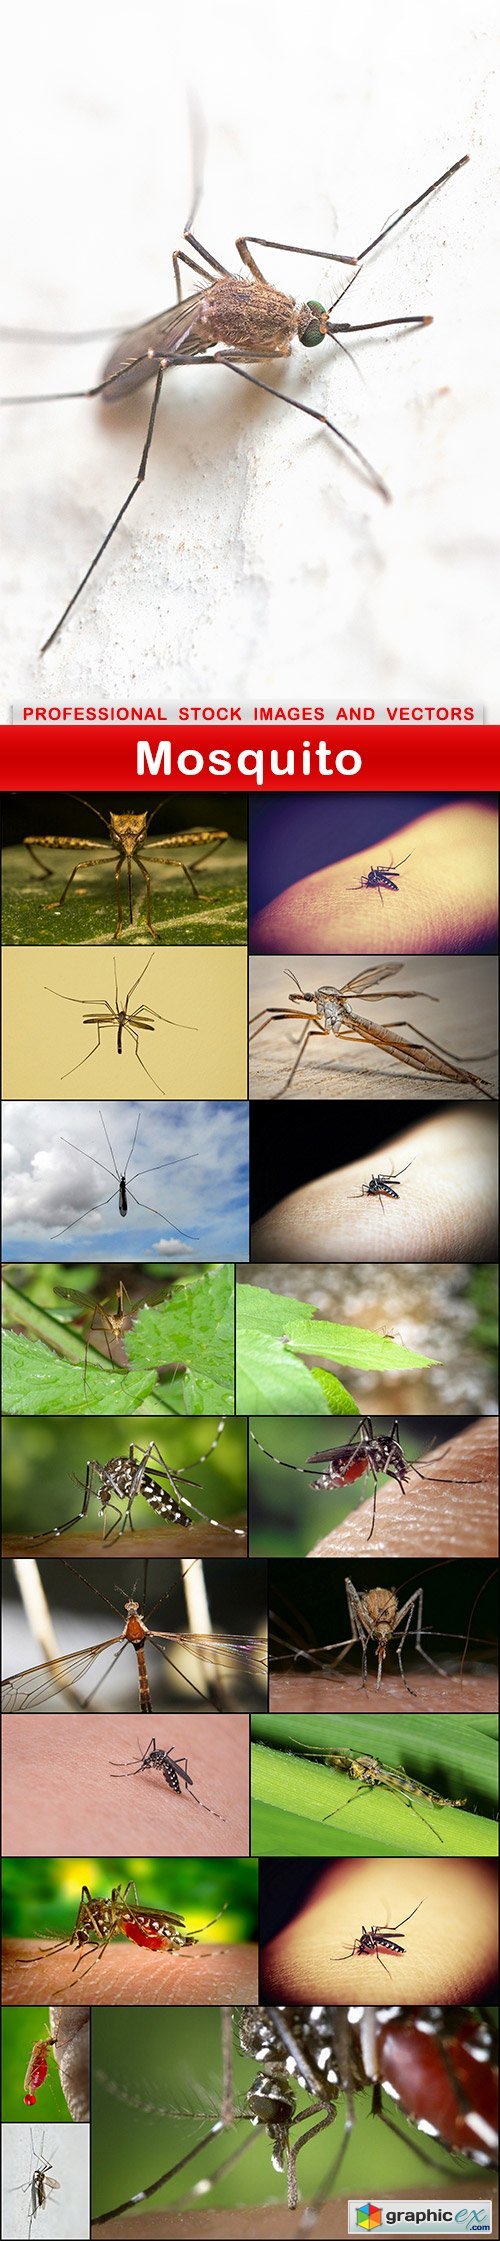 Mosquito - 20 UHQ JPEG